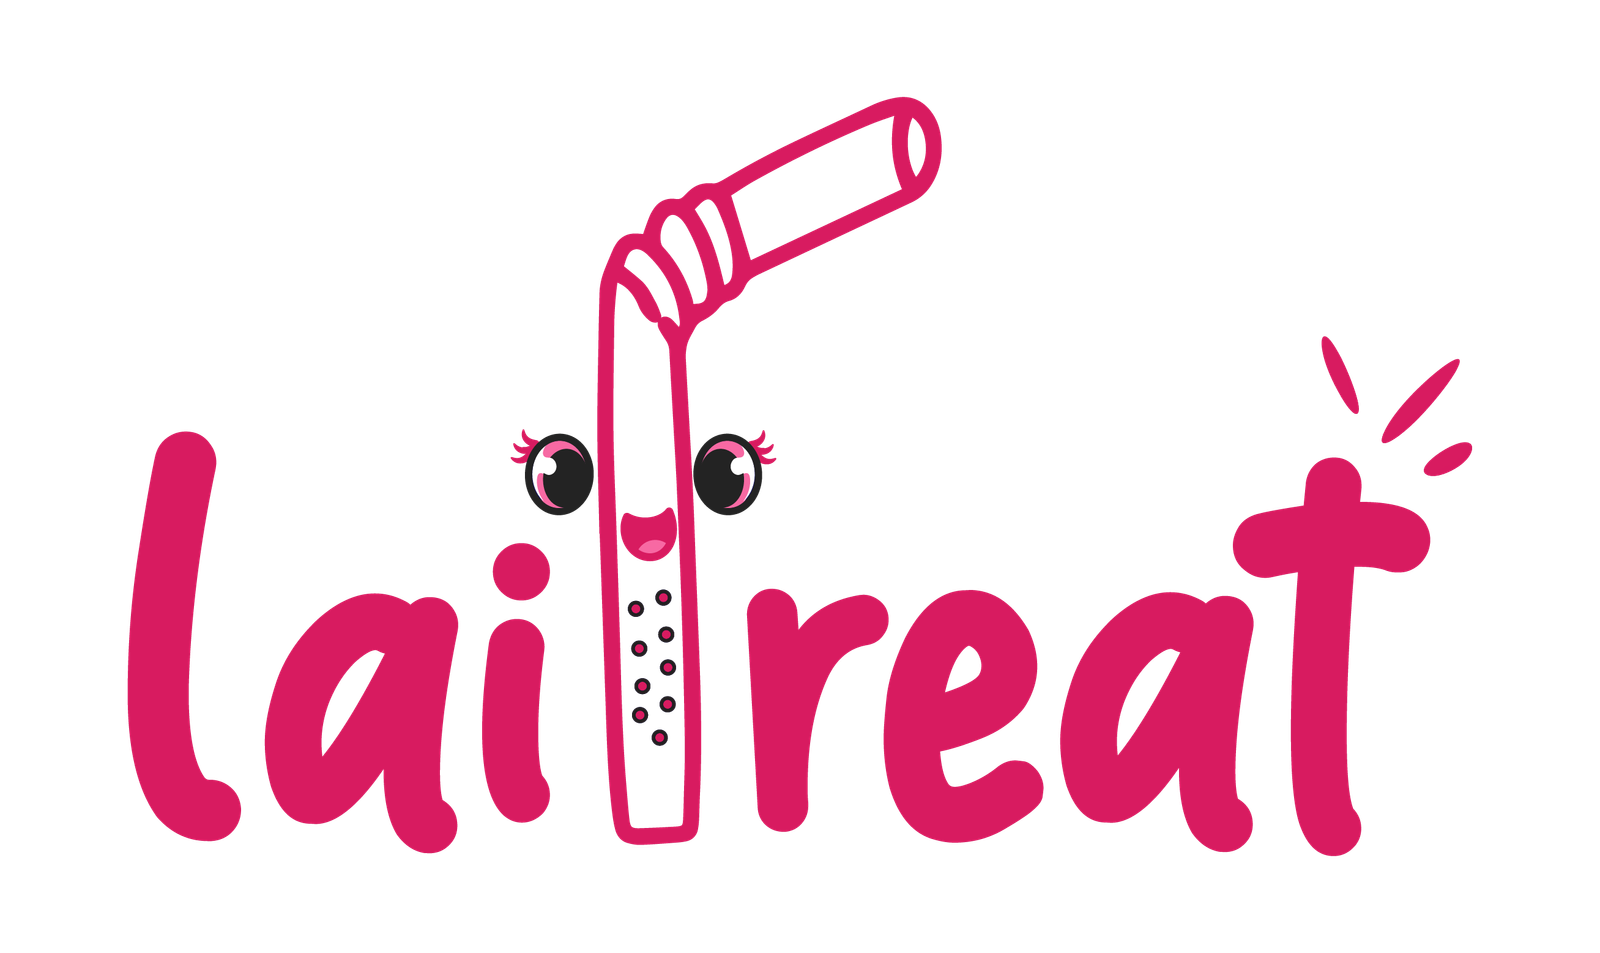 laitreat logo design